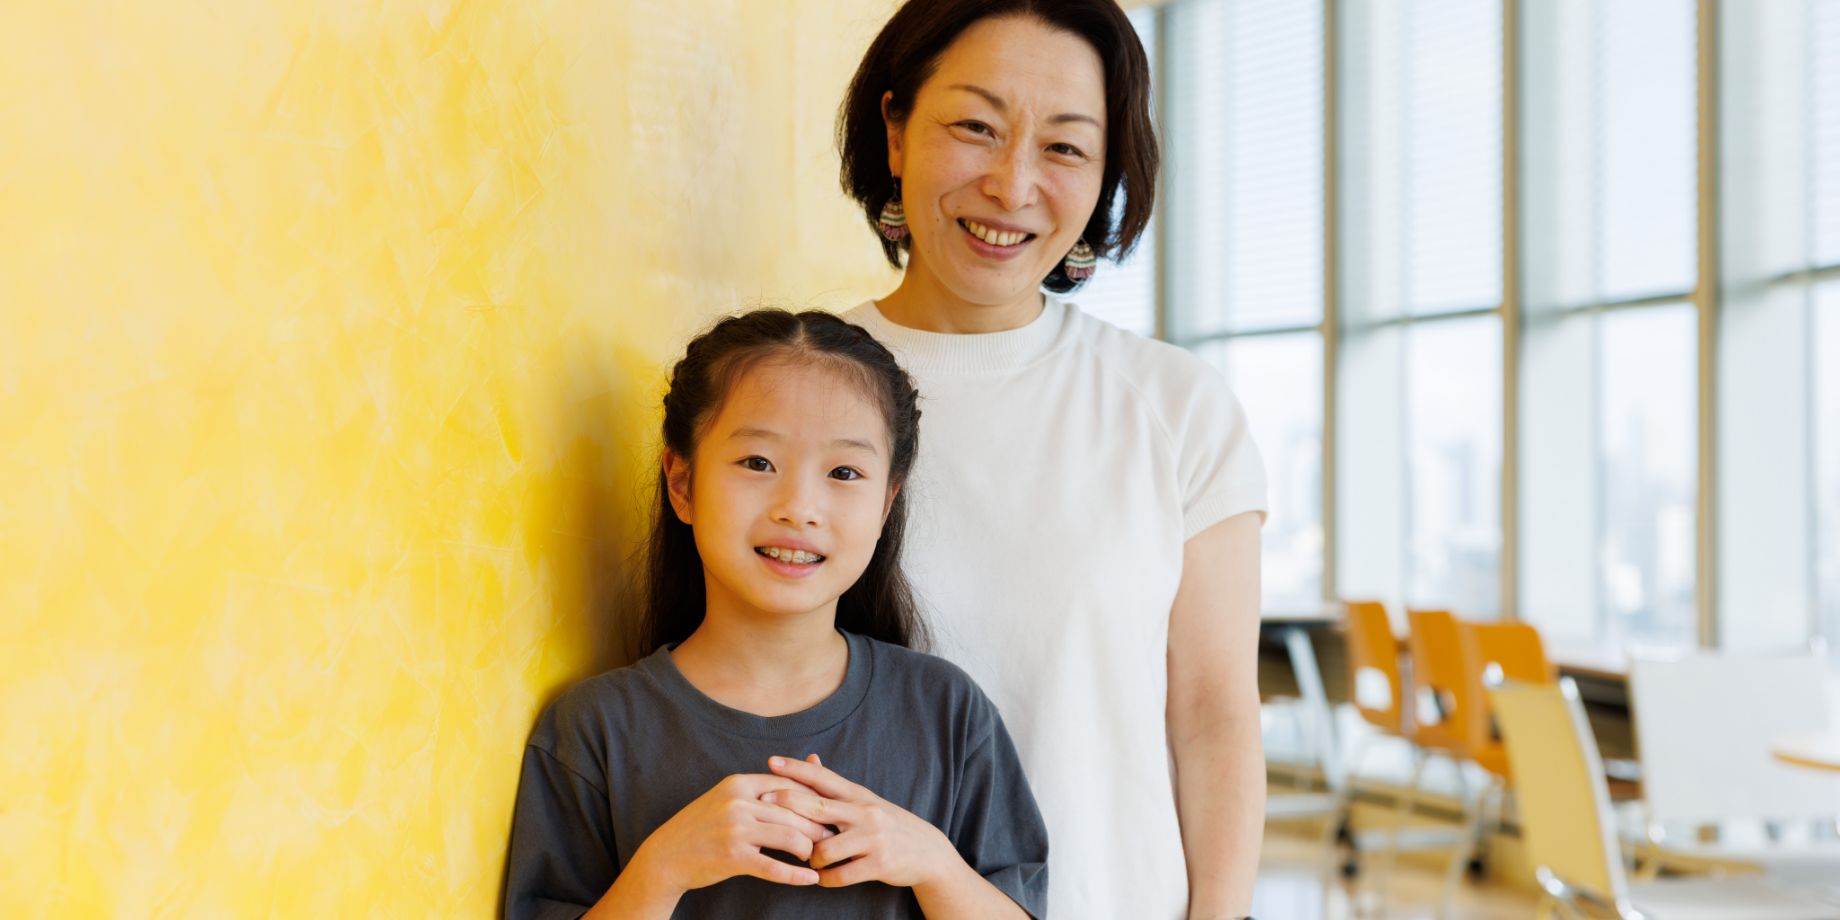 Keiko Saito (Automobility Business Strategic Planning Division, Next Generation Automobility Business Division, and DX Strategy Division) and her daughter, Rinka